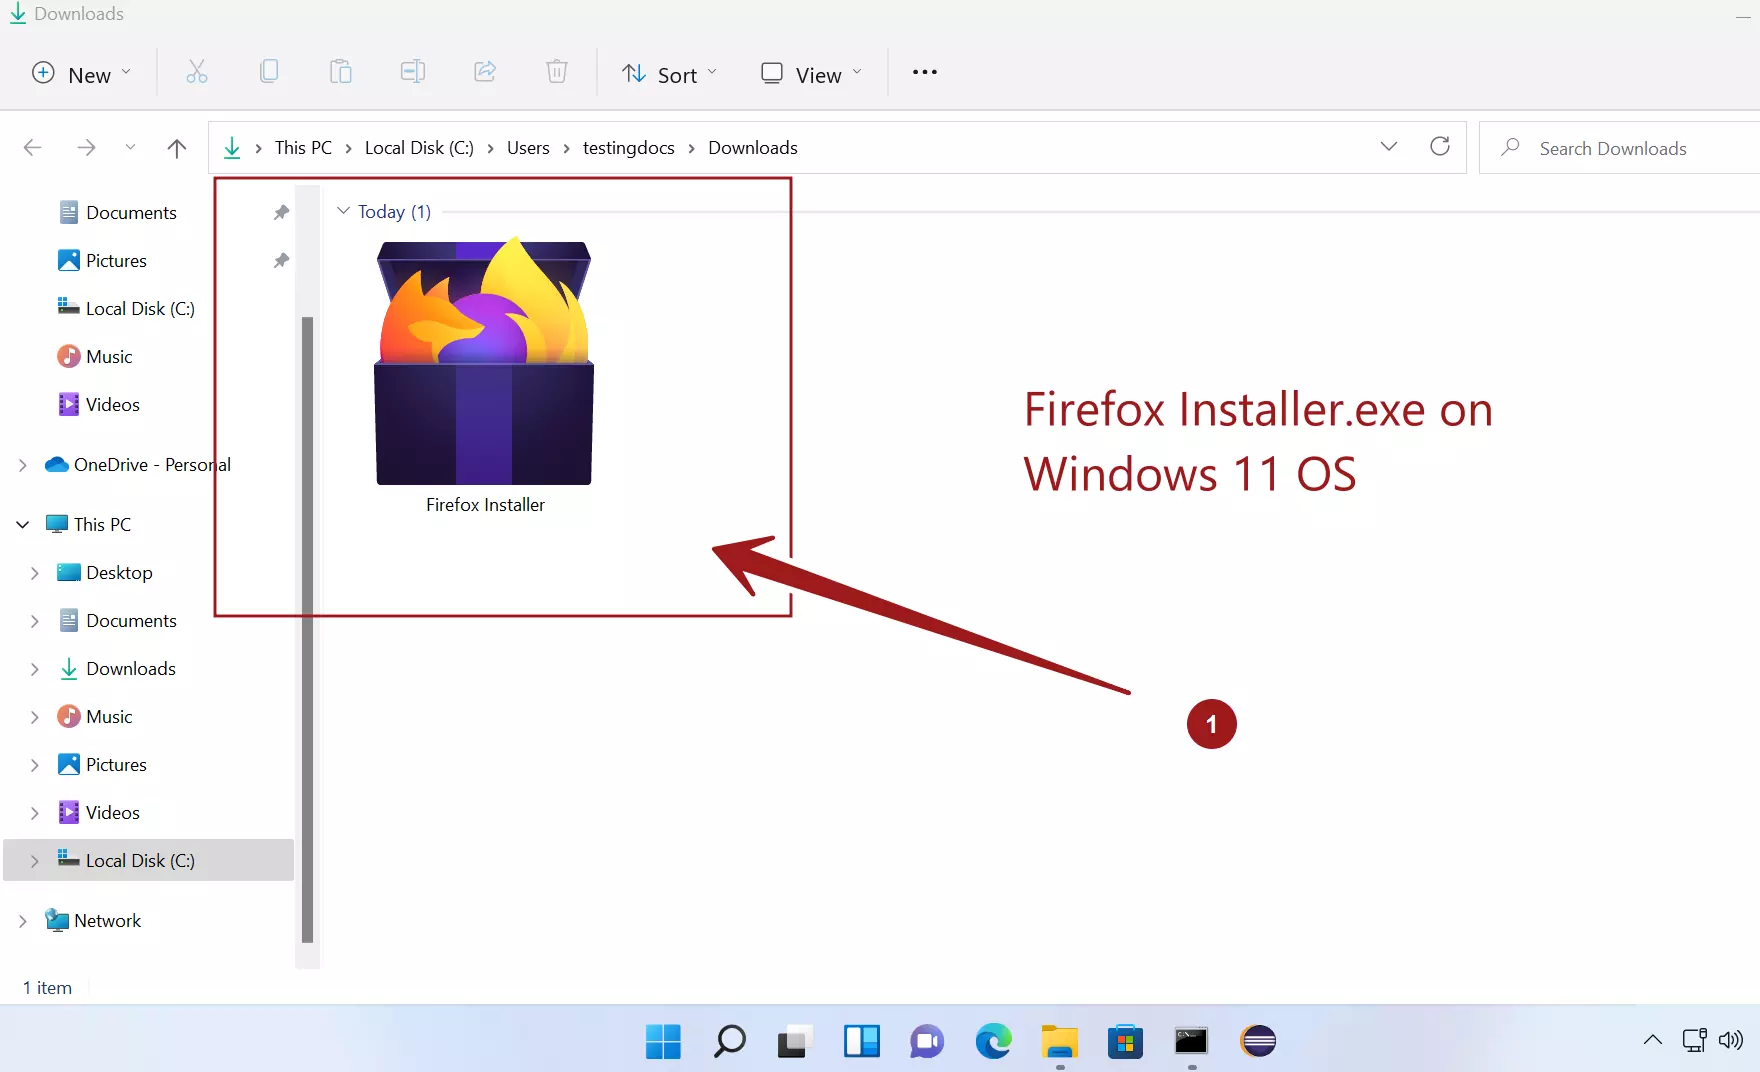 Firefox Installer EXE on Windows 11 OS